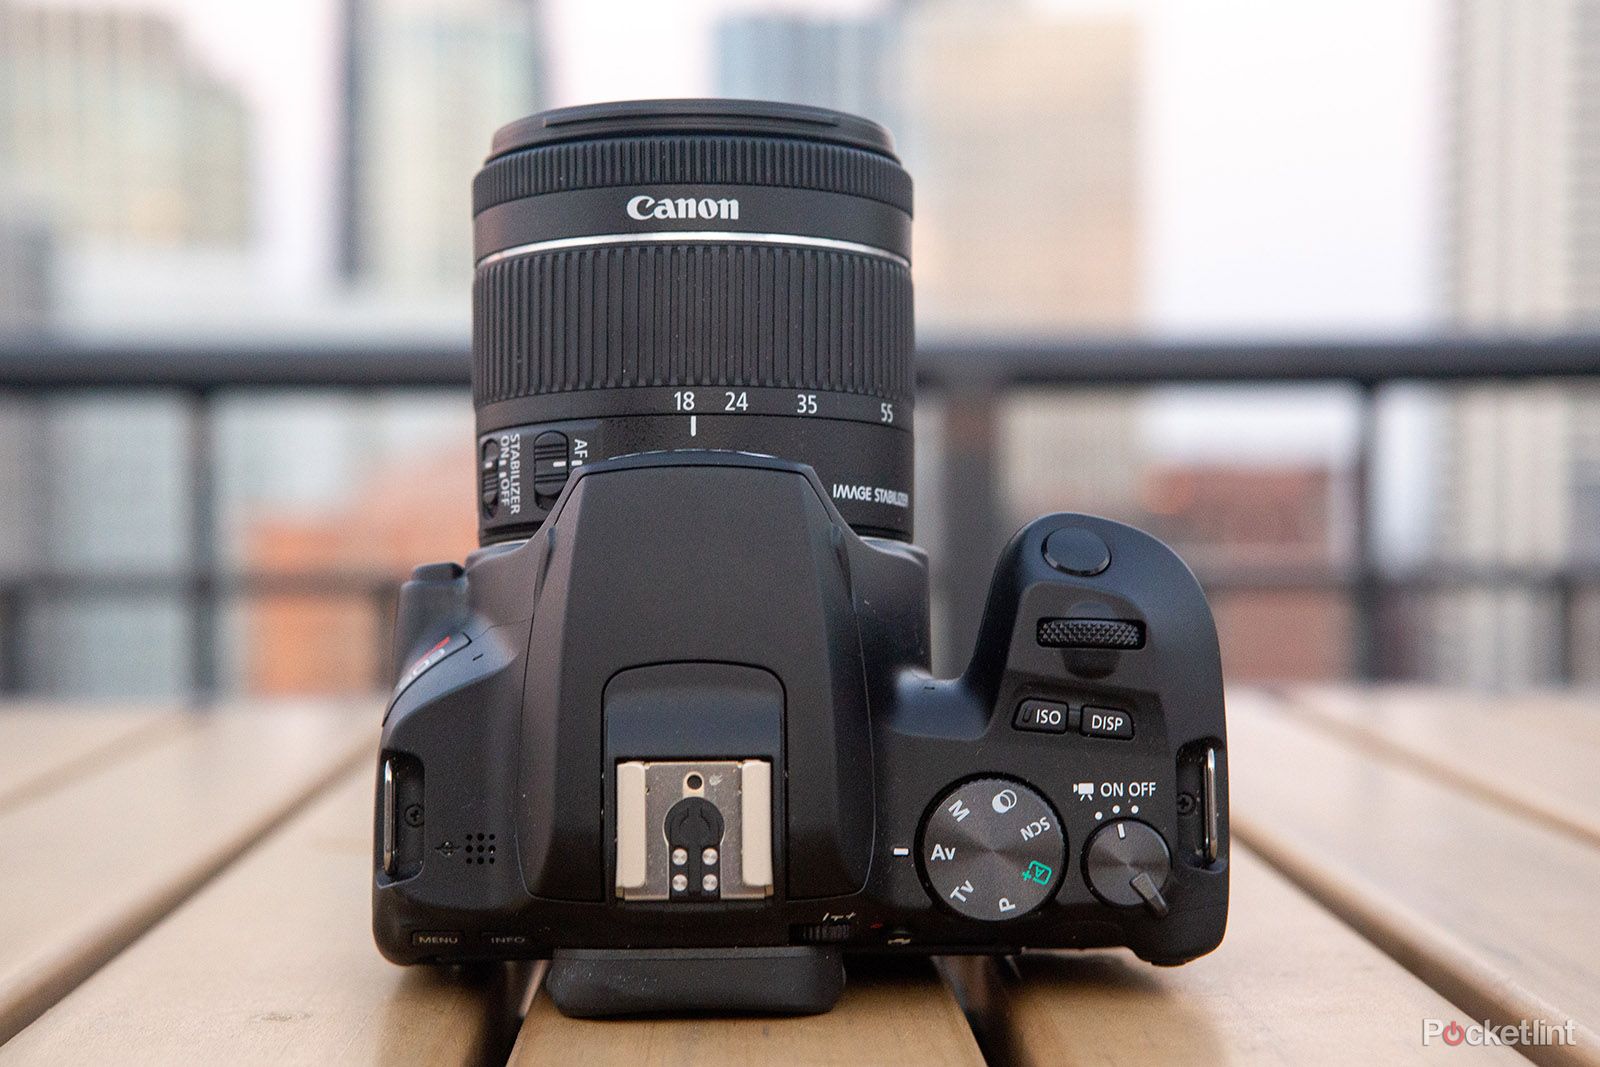 Canon EOS 250D Rebel SL3 review